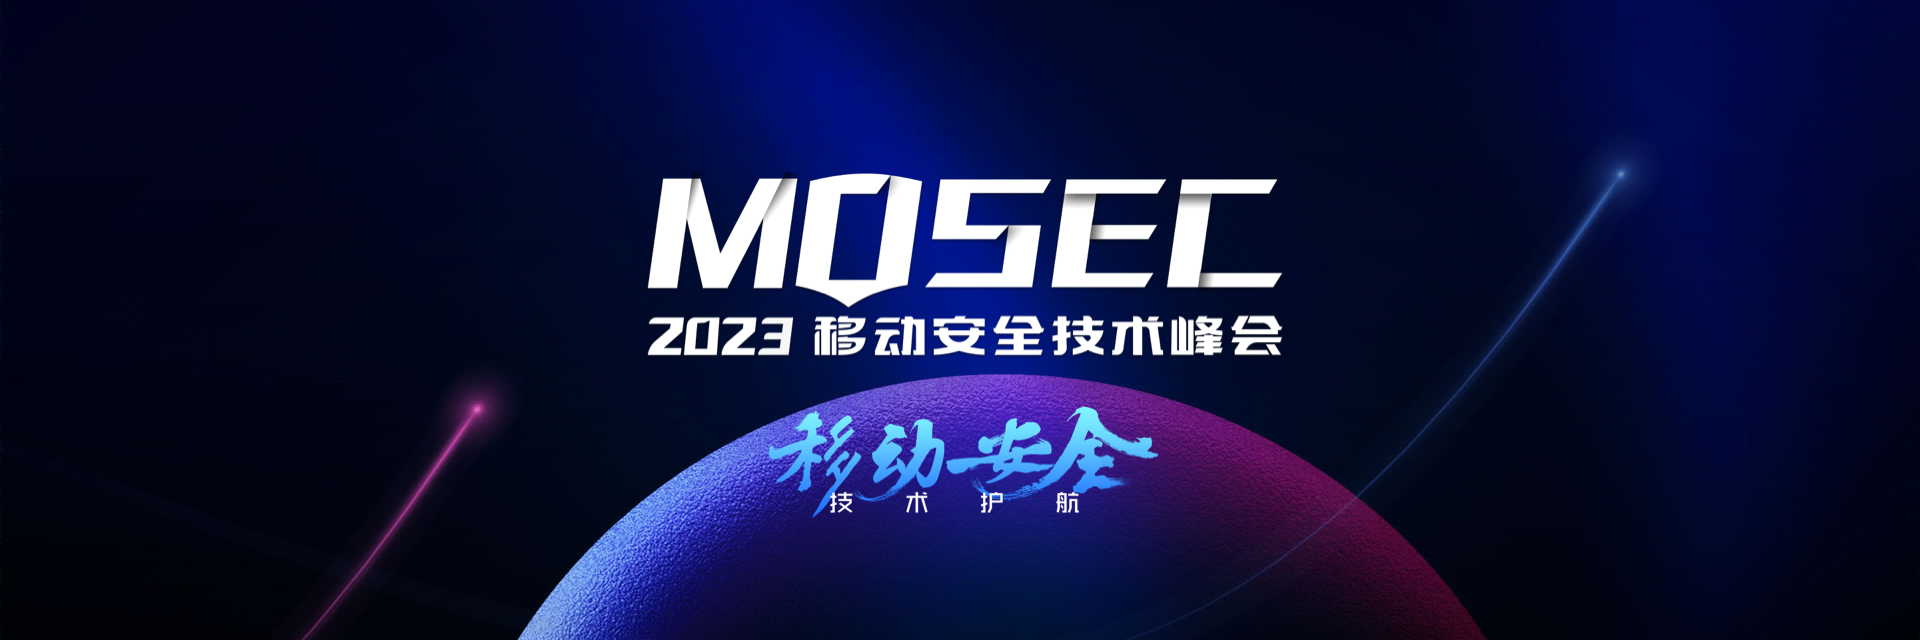 MOSEC2023移动安全技术峰会